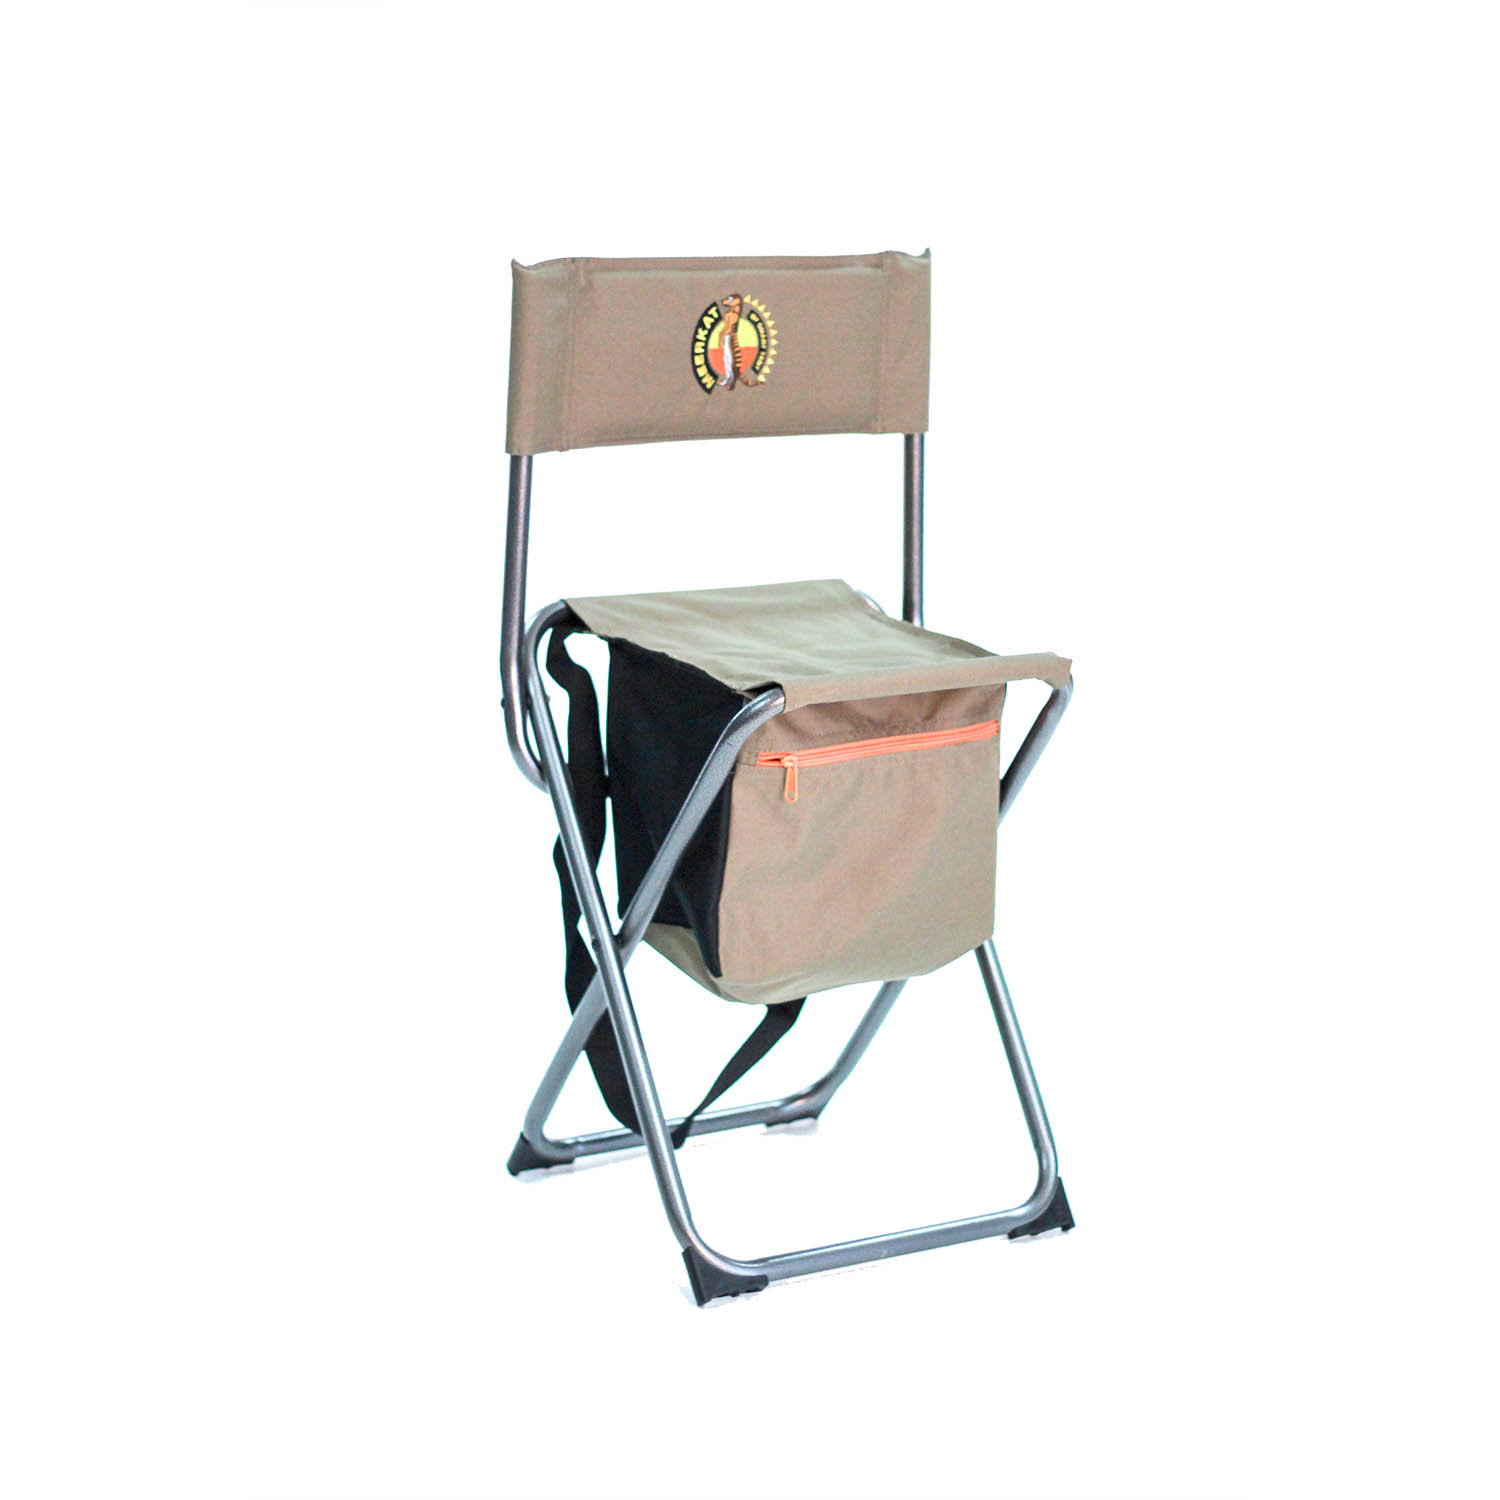 Folding camping stool